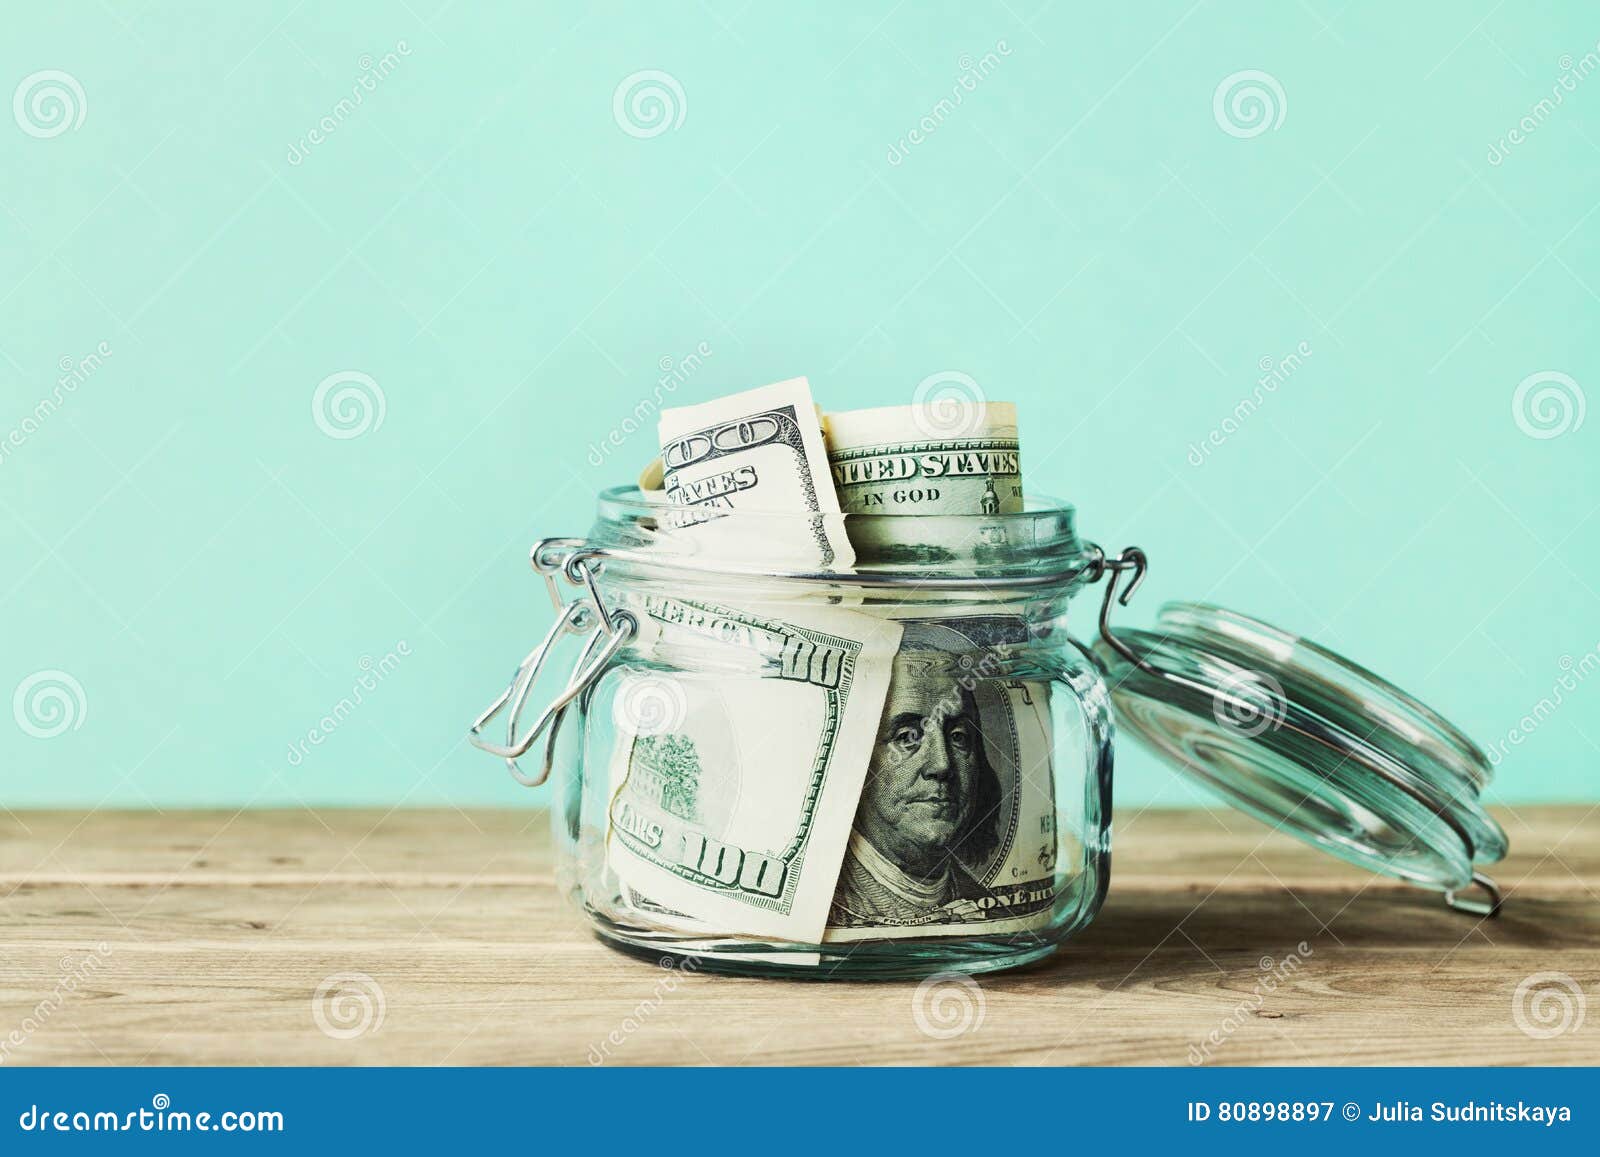 dollar bills in glass jar on wooden table. saving money concept.